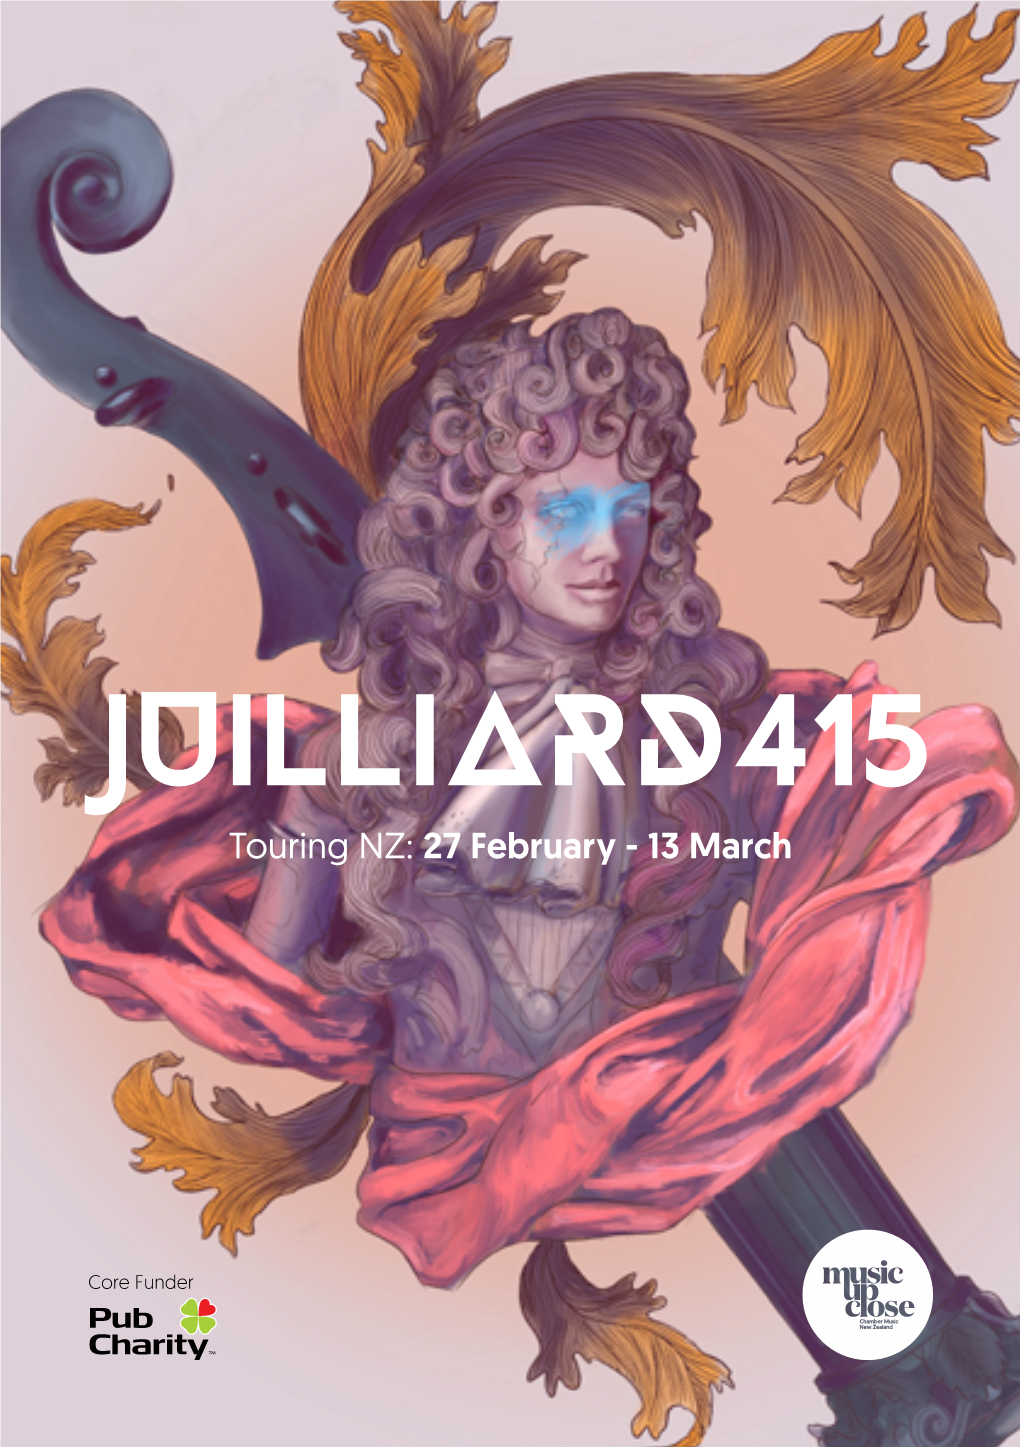 JUILLIARD415 Touring NZ: 27 February - 13 March